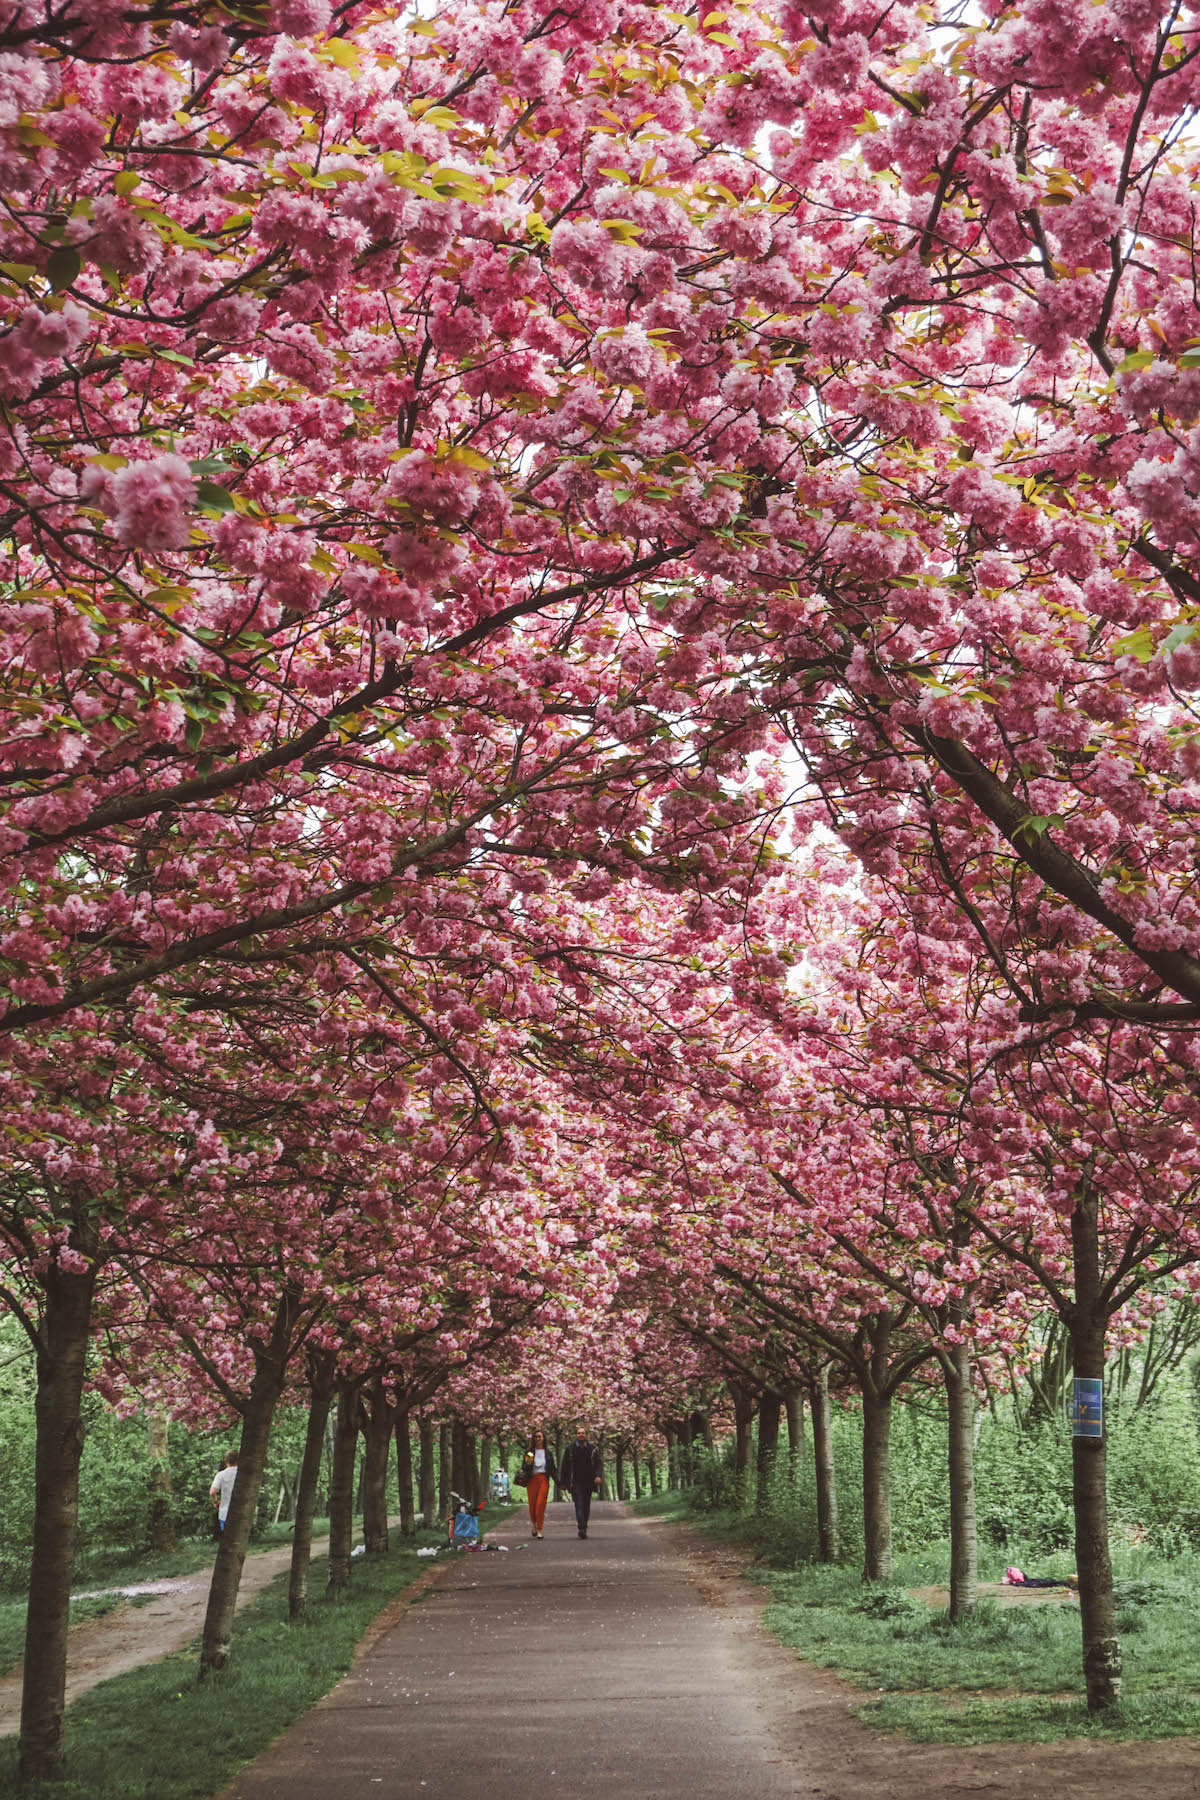 Blooming cherry blossom trees near Bornholmer Strasse